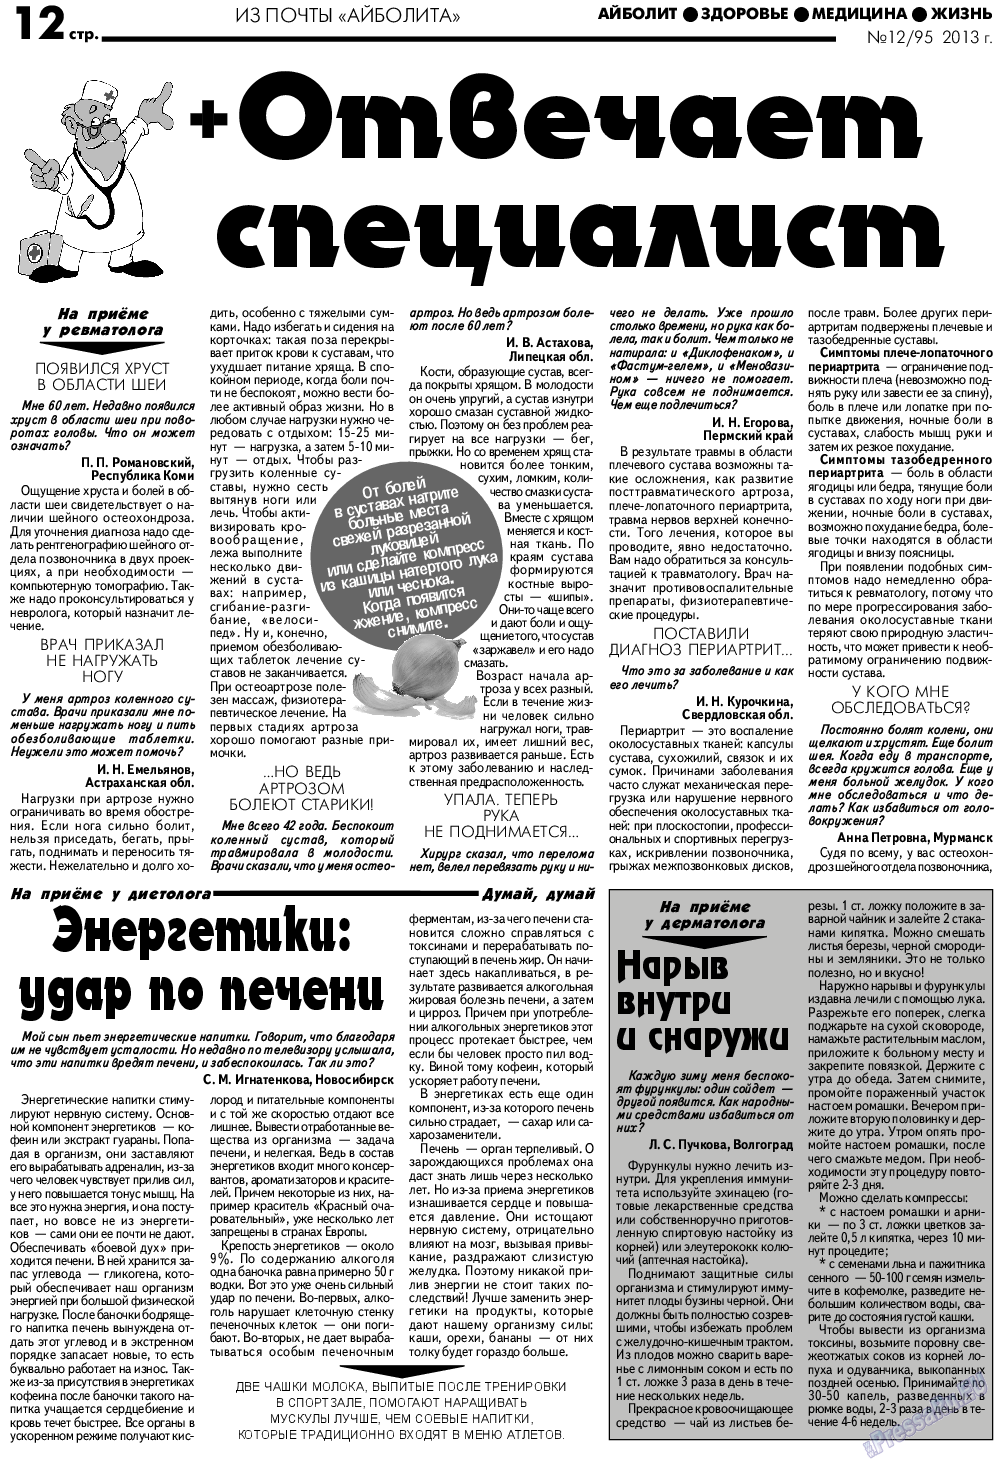 АйБолит (газета). 2013 год, номер 12, стр. 12